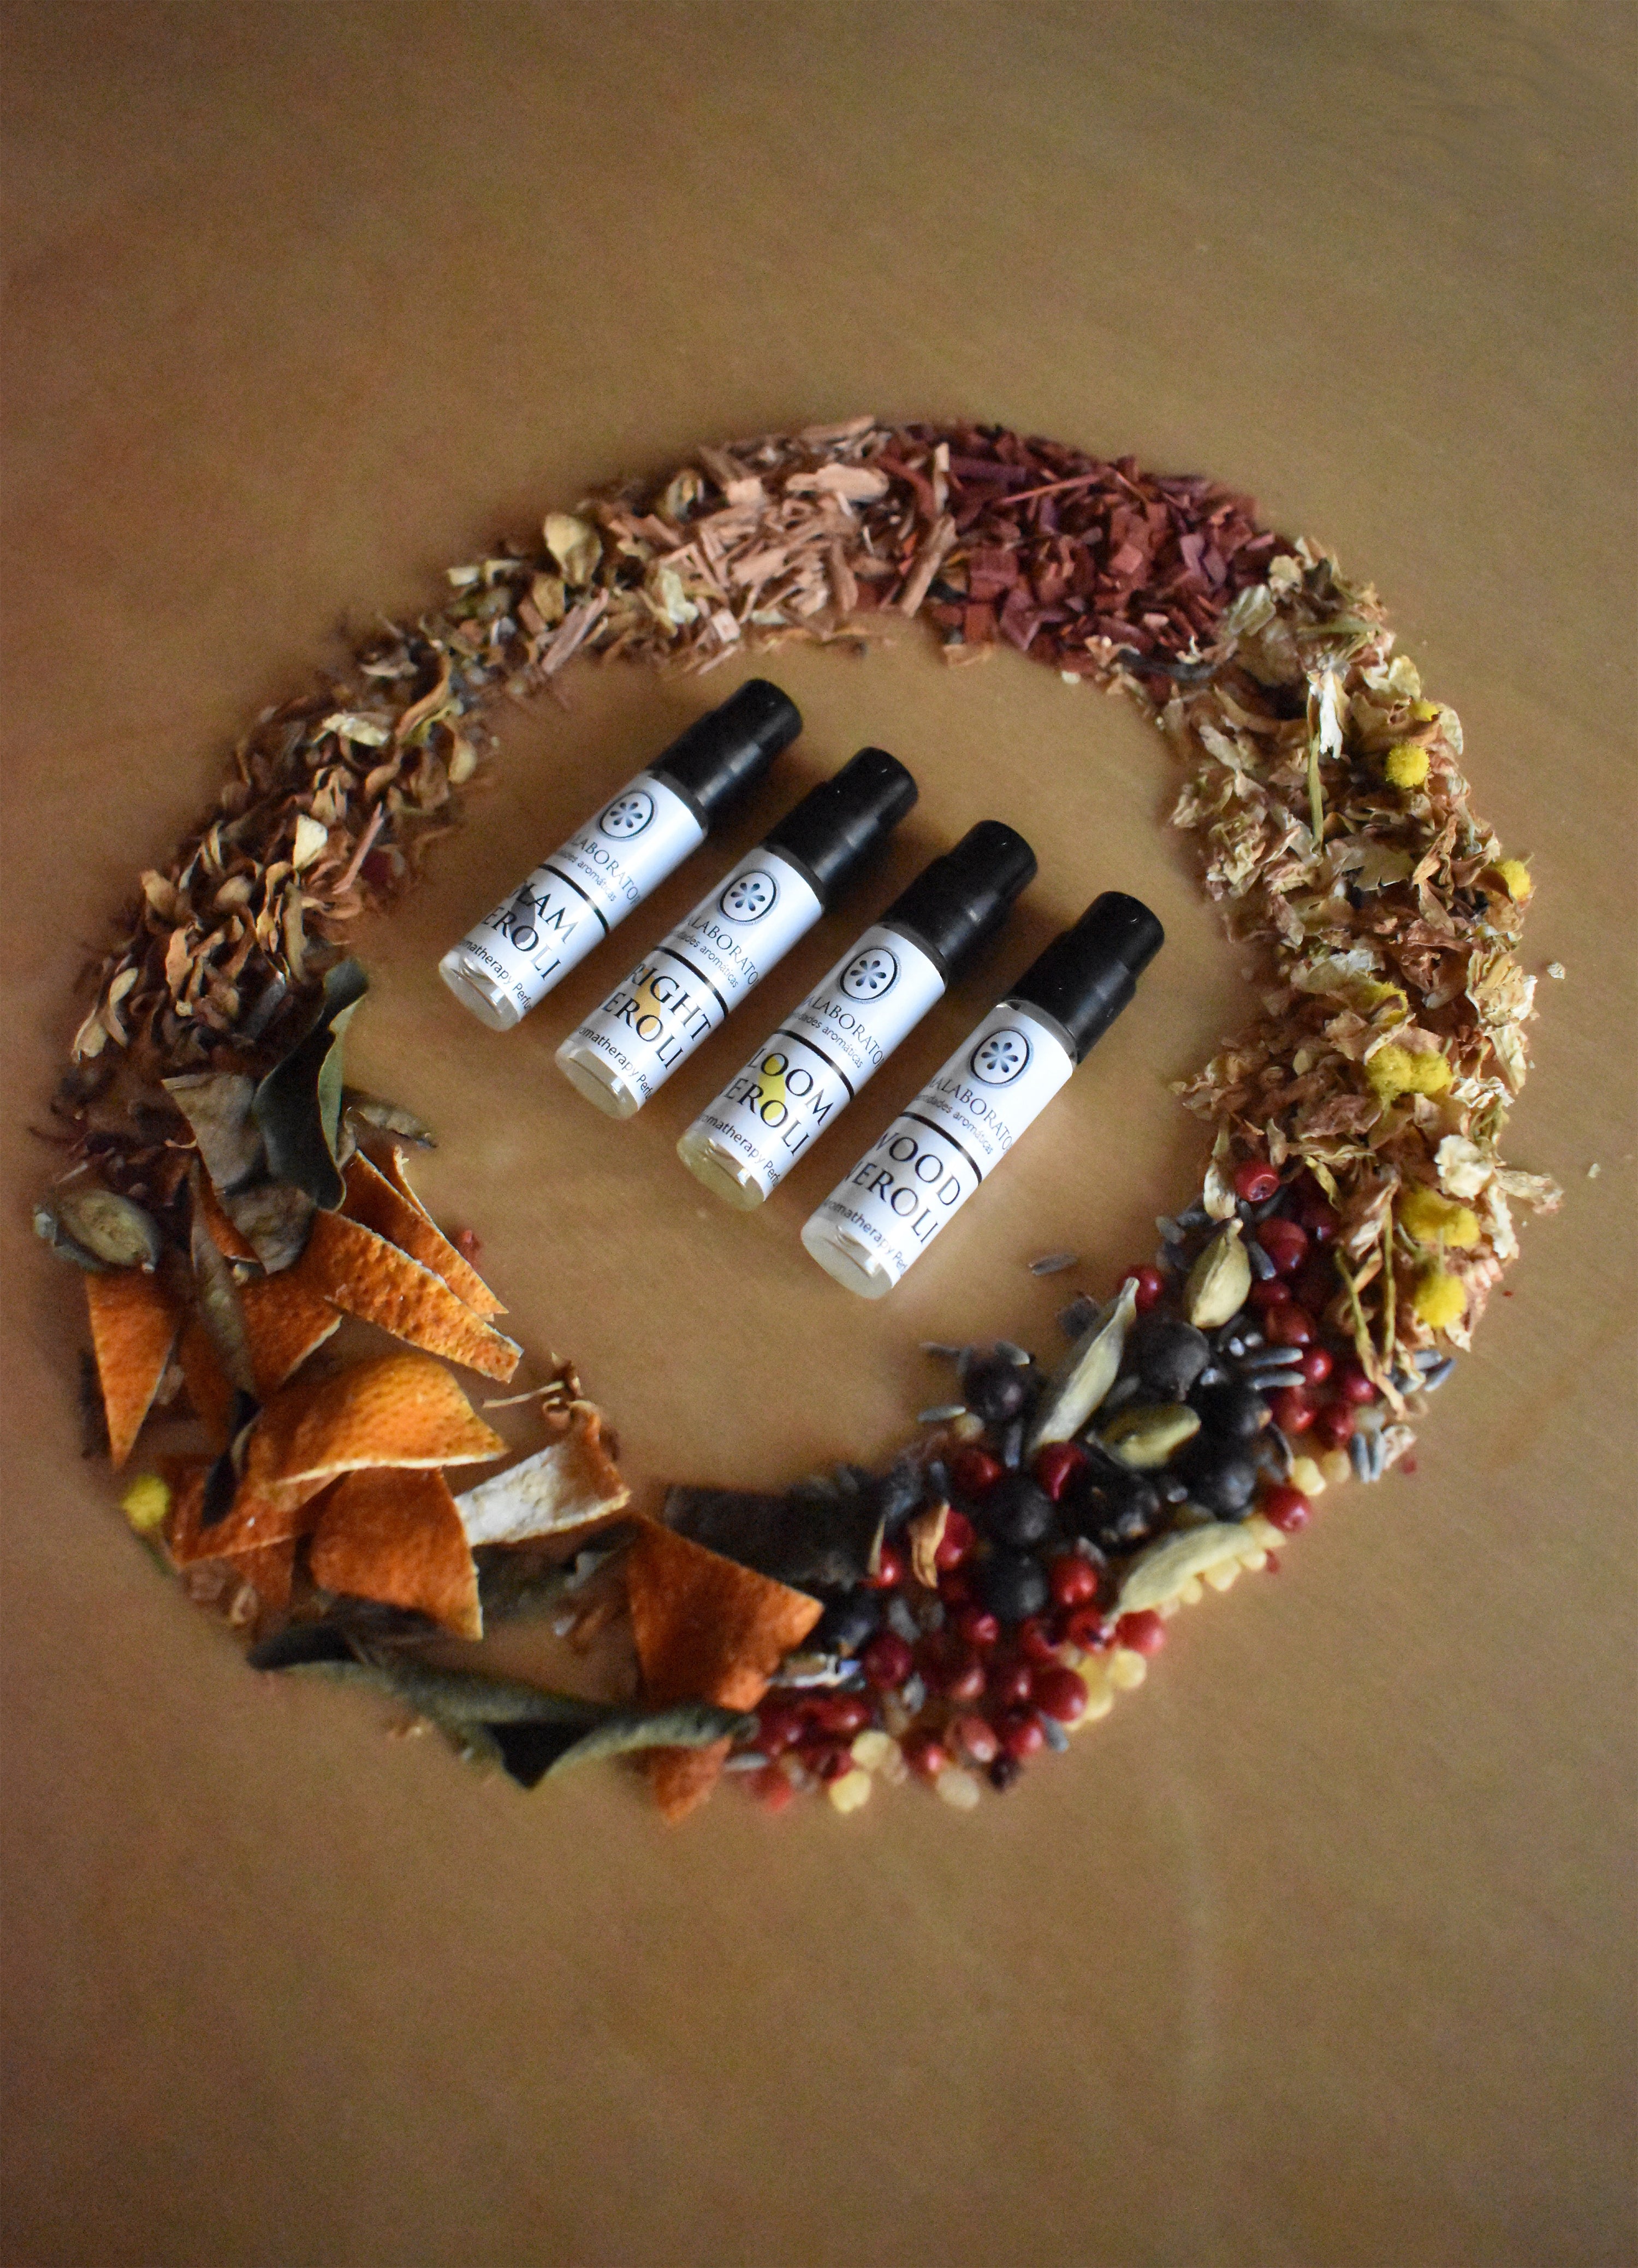 NEROLI COLLECTION. Aromatherapy Clean Perfumes. Organic. 8ml.